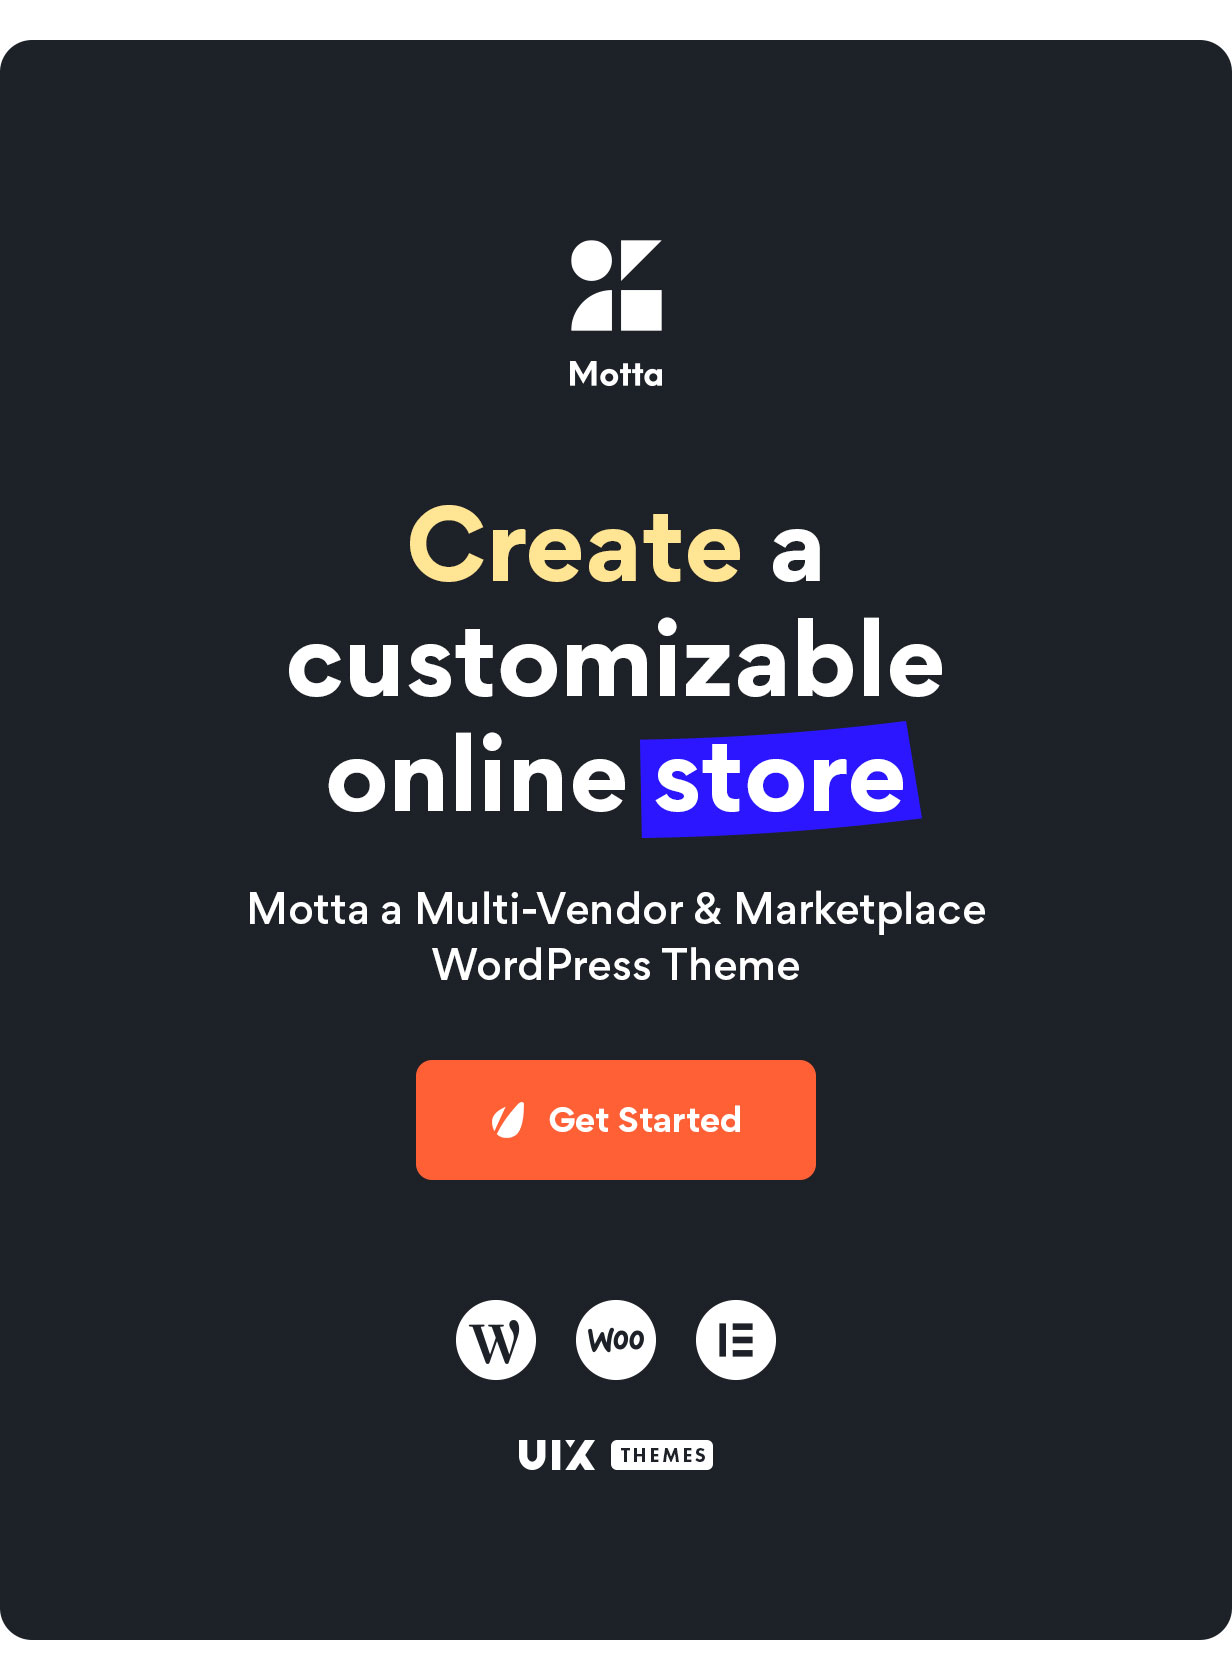 Motta WooCommerce theme - The multi-vendor and marketplace WordPress theme